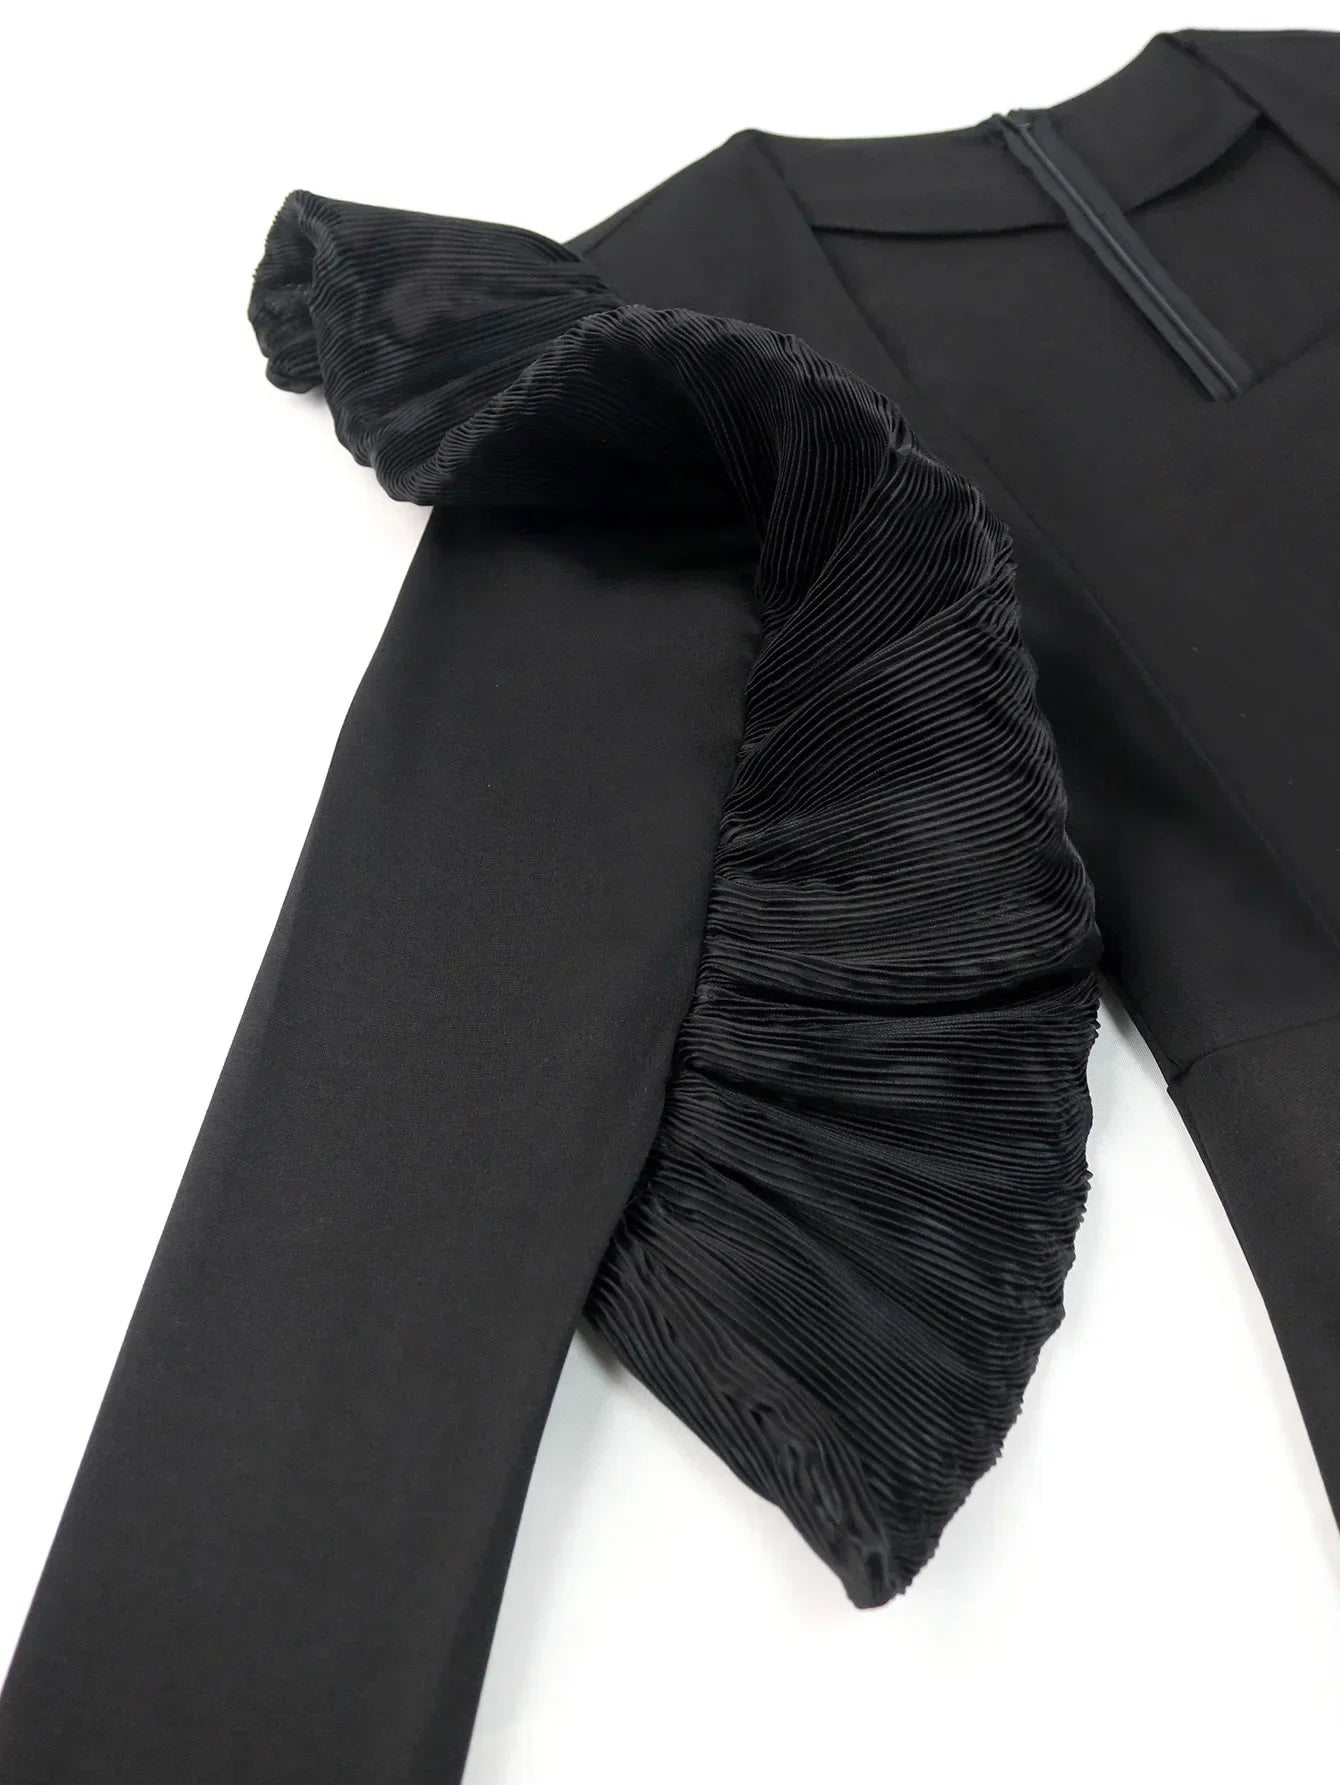 Bodycon Women‘s Black Long Dress Elegant Ruffle Trim Sweetheart Collar Long Sleeve Slim Fit Dresses Stylish Party Event Gowns